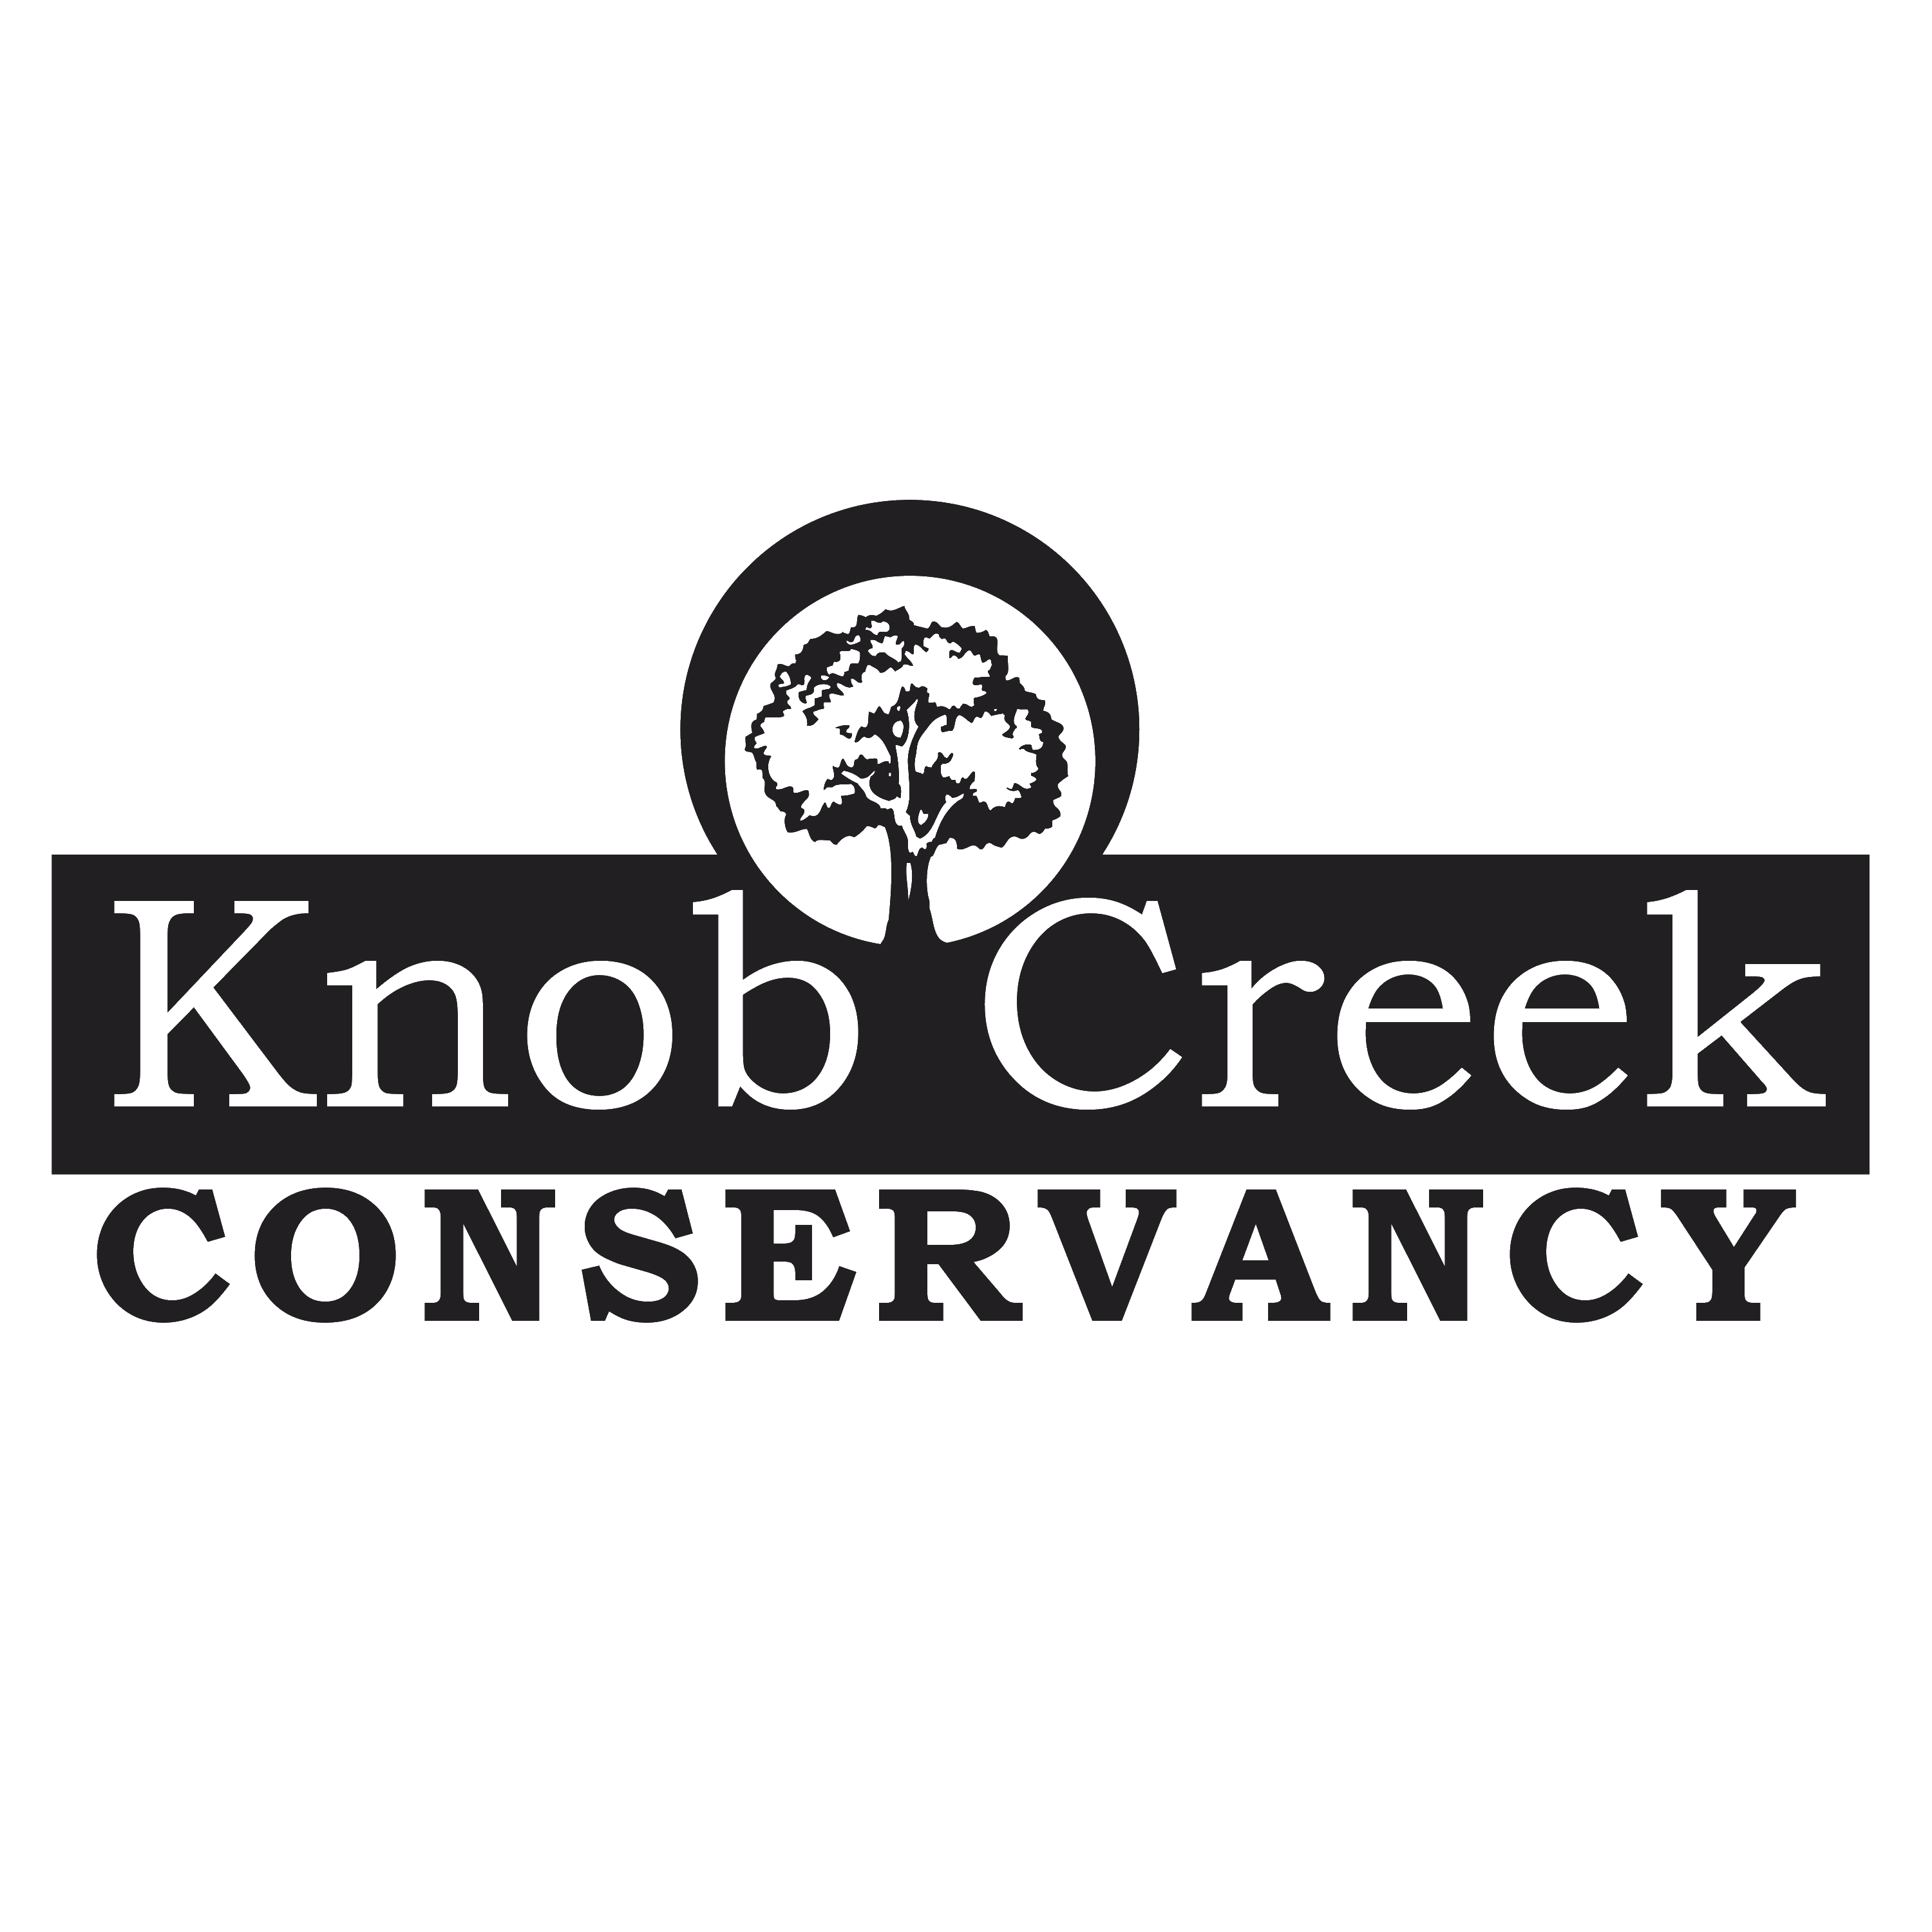 Knob Creek Conservancy logo